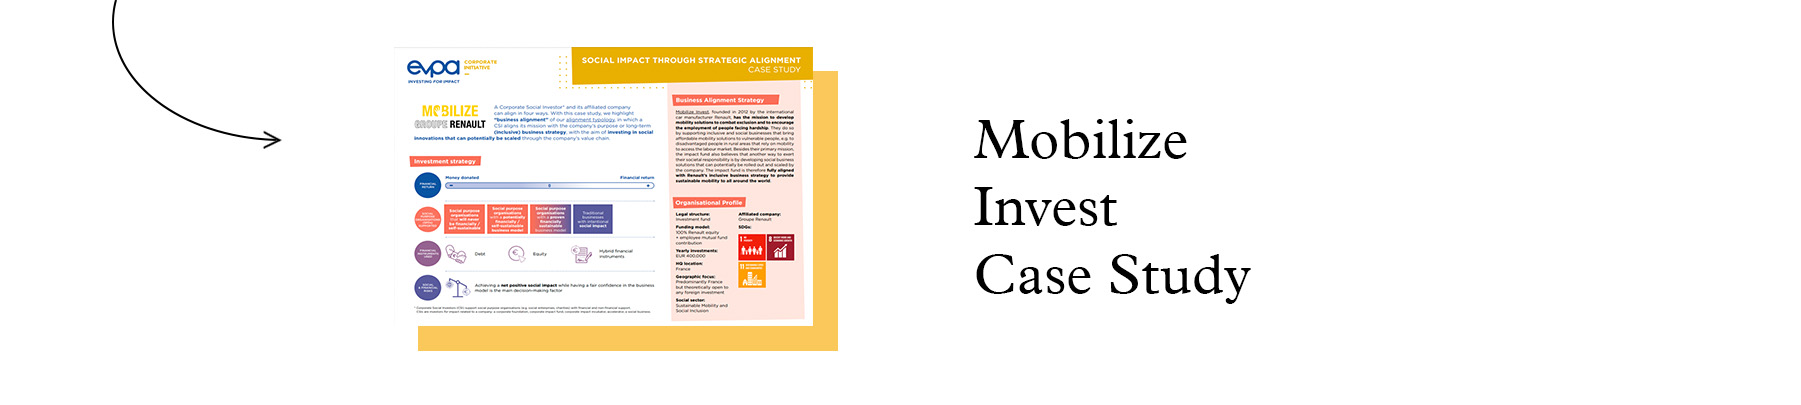 Strategic Alignment Case Study - Mobilize Invest